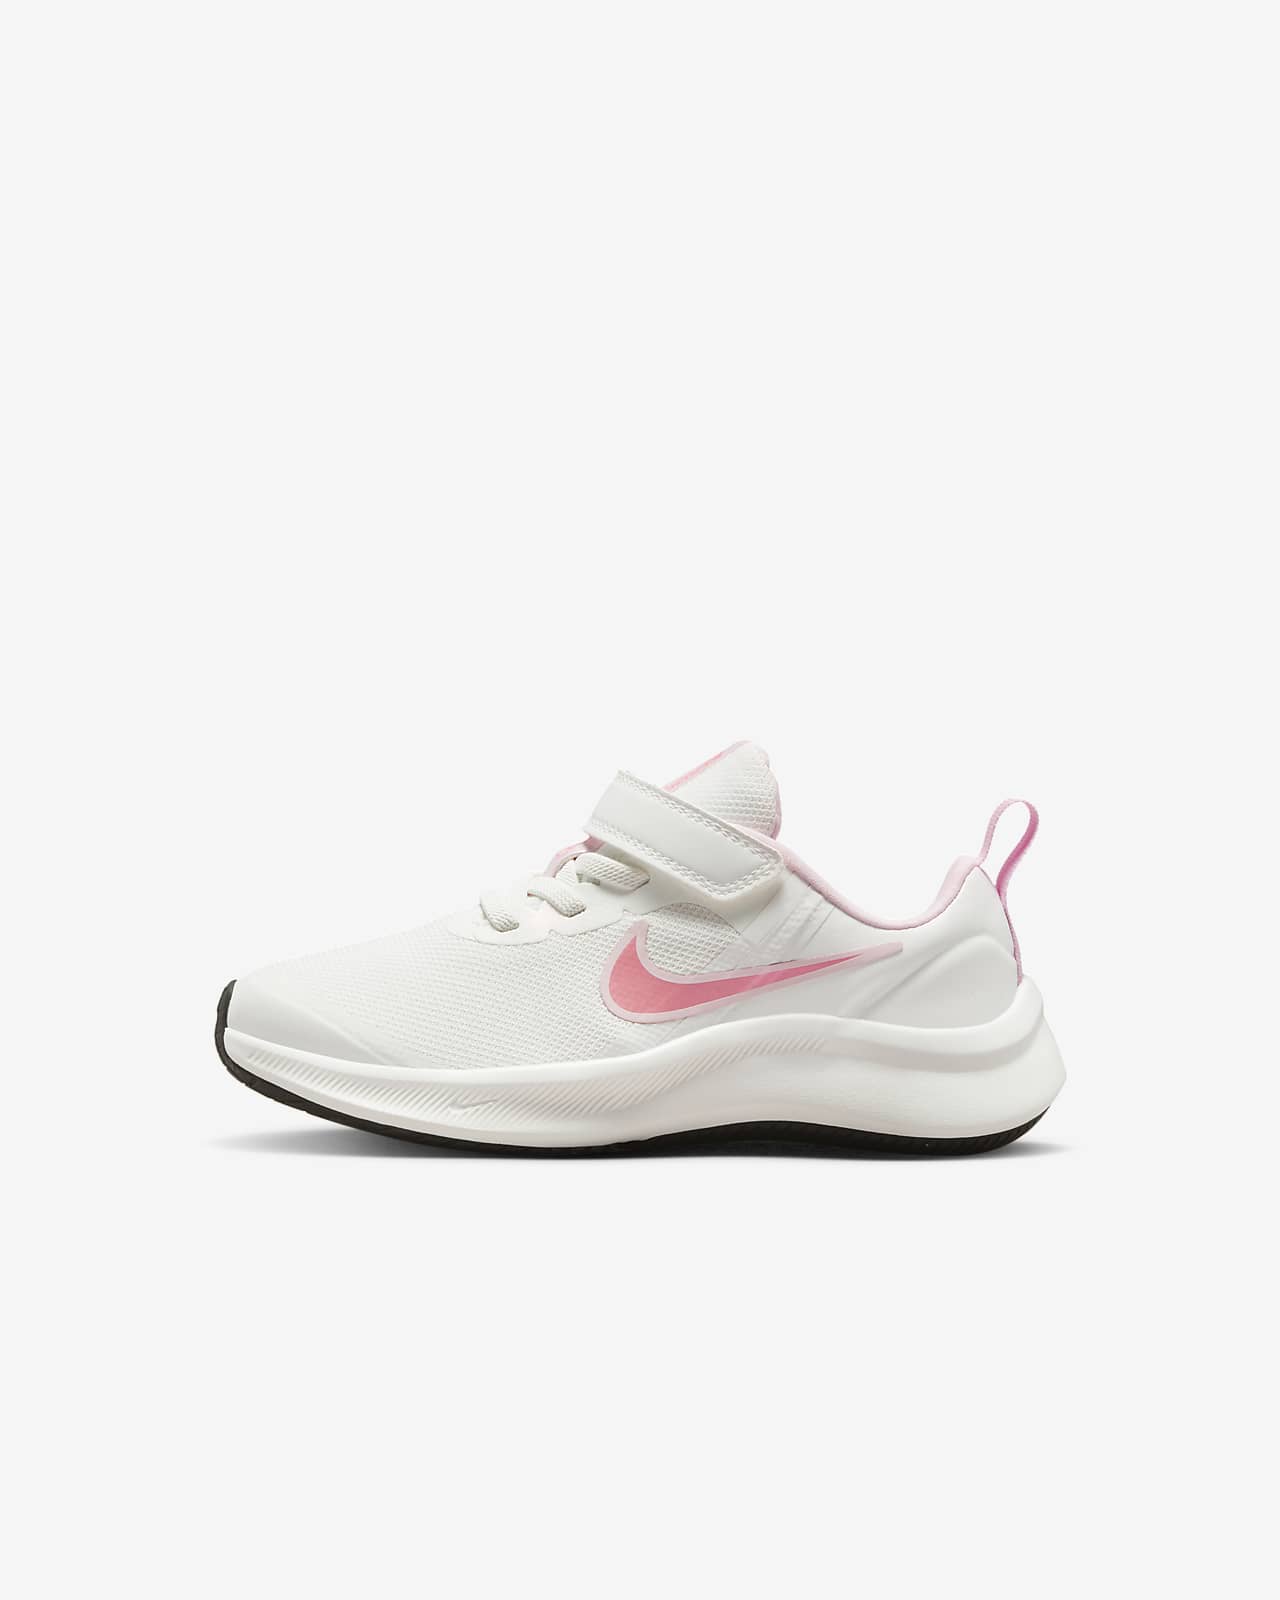 Nike Star Runner 3 SE Schuh für jüngere Kinder